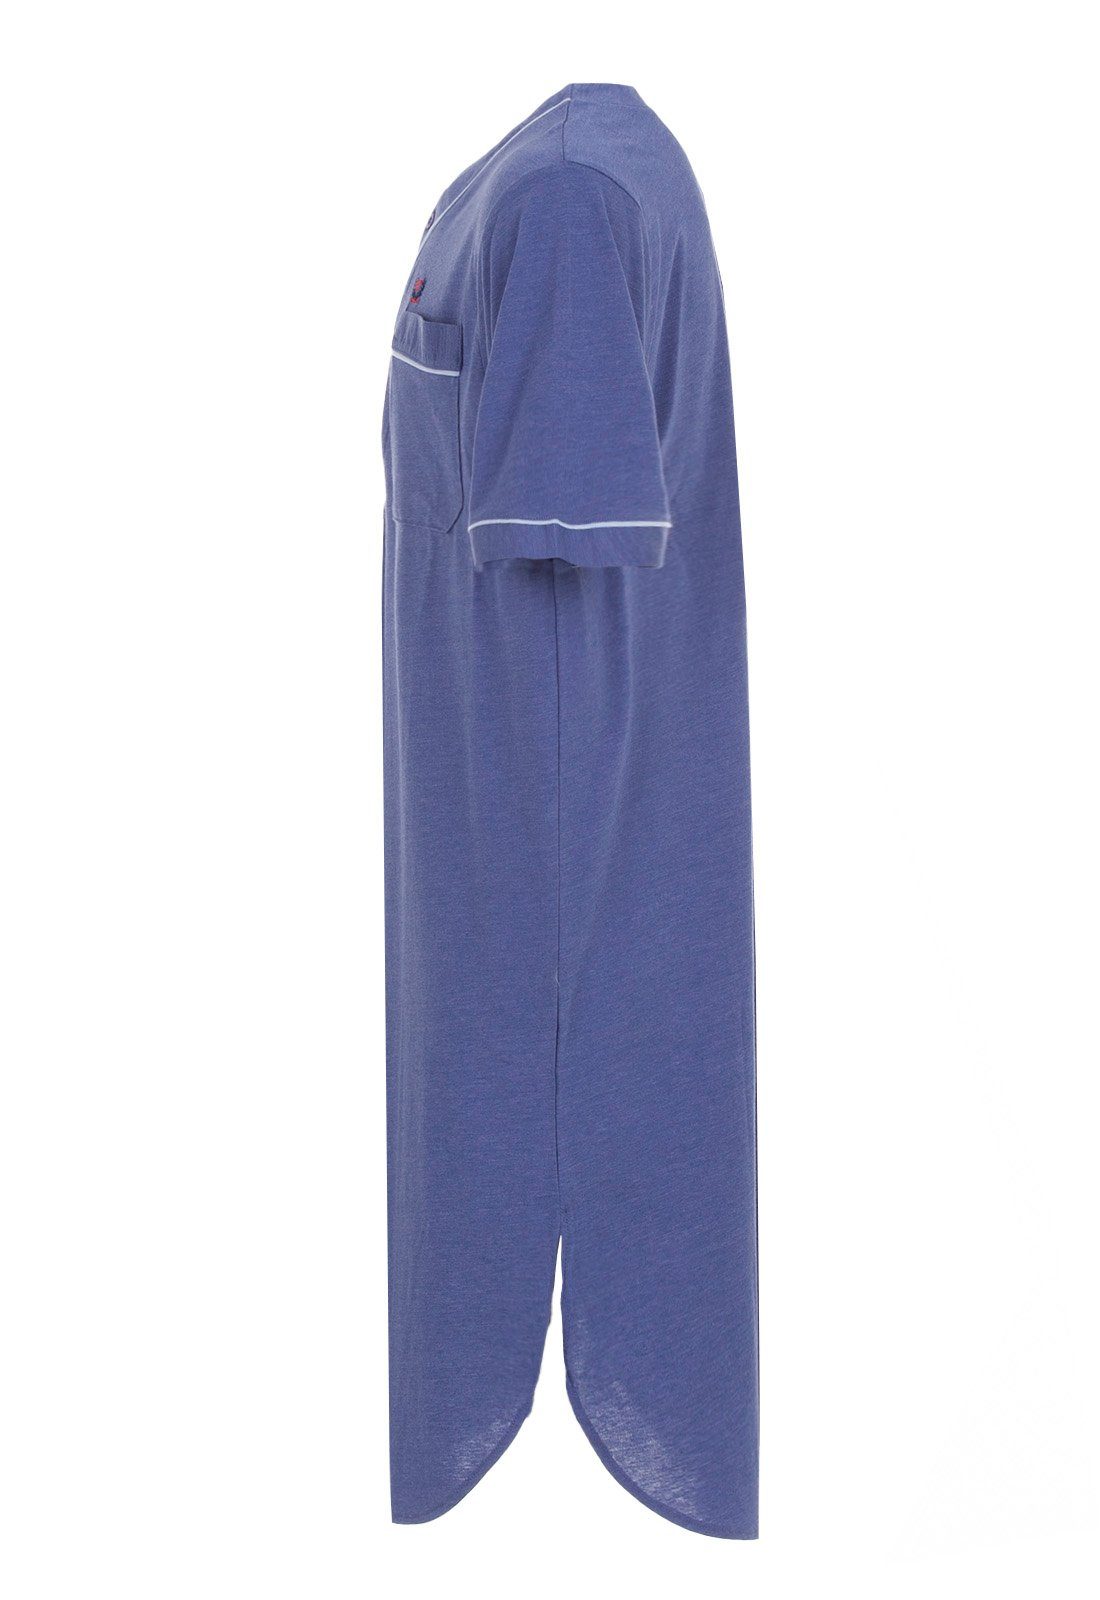 Paspel blau - Terre Henry Nachthemd Kurzarm Nachthemd uni